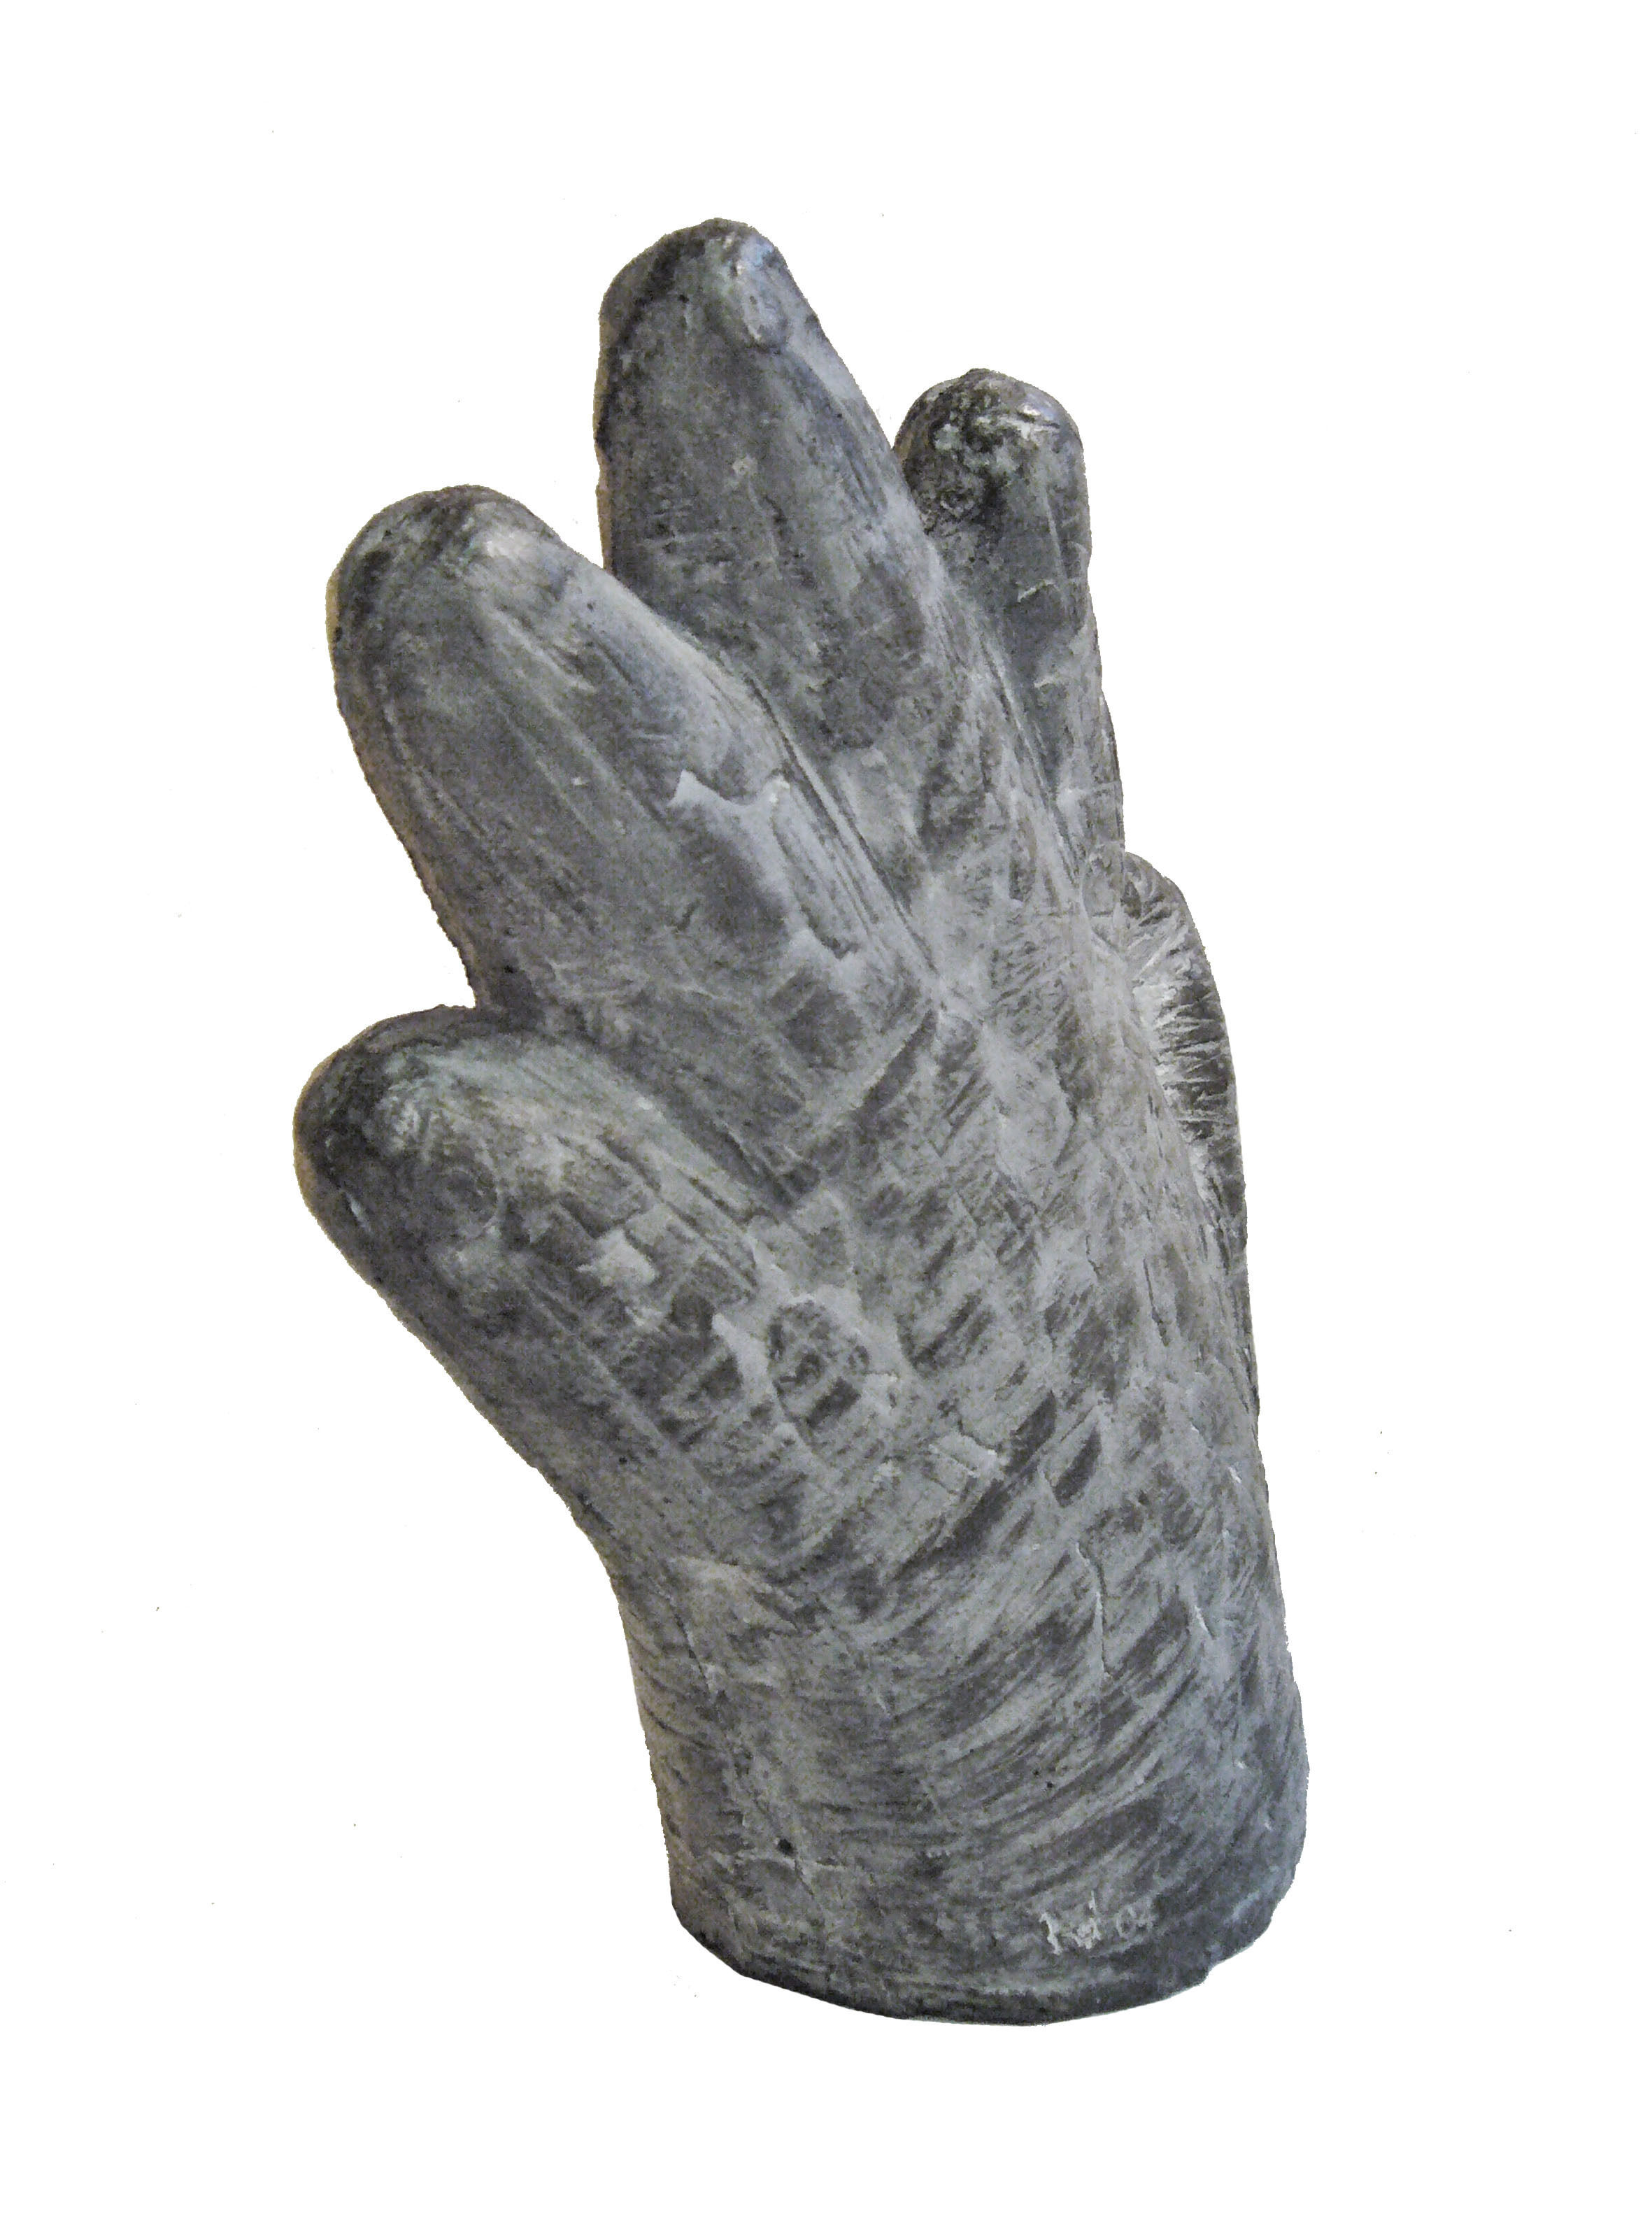 Sculpture "Hand" (1998)